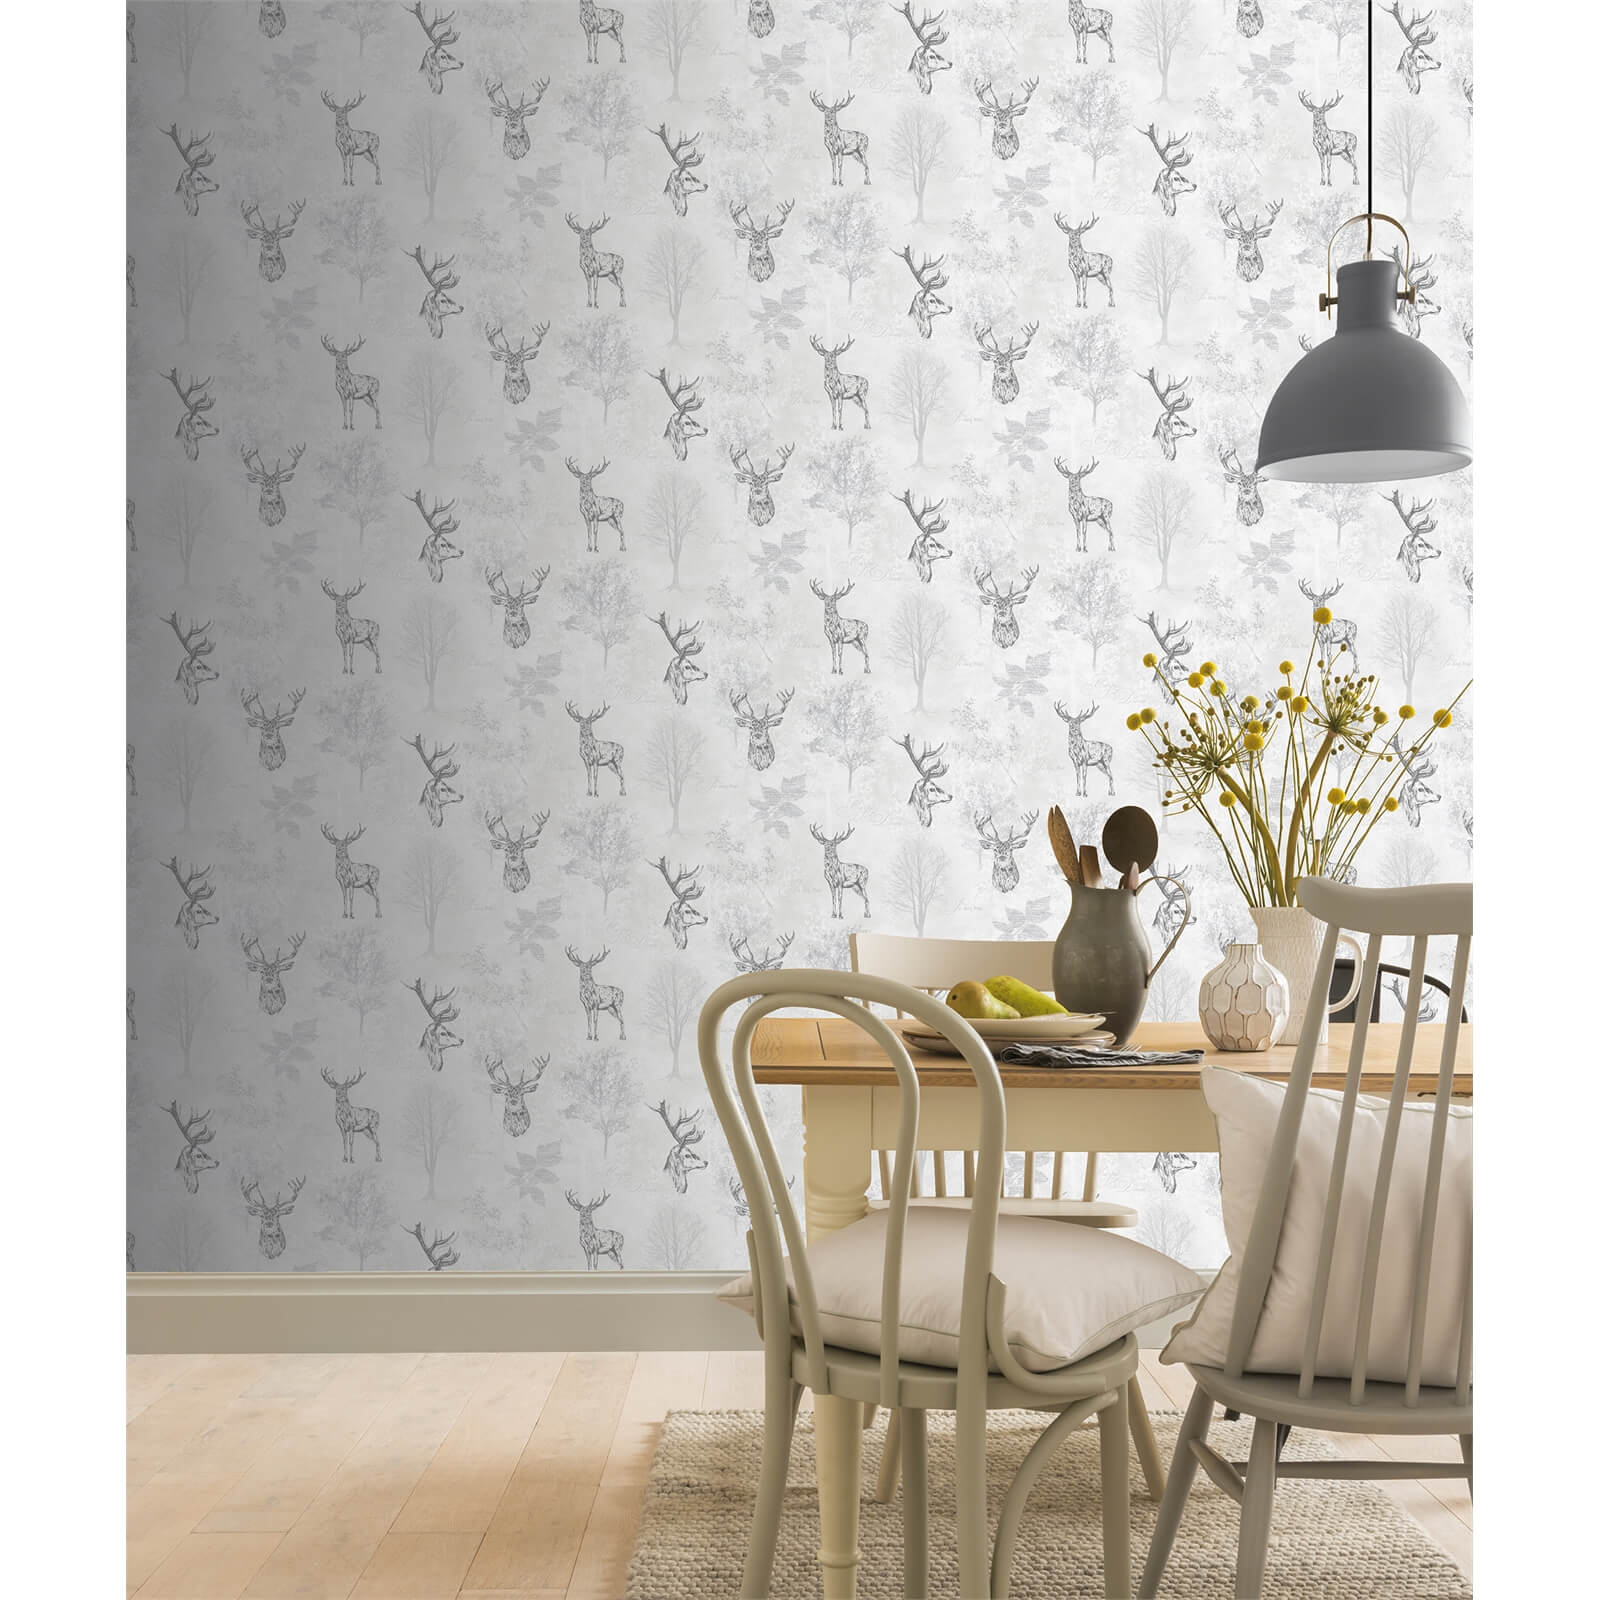 Arthouse Etched Stag Animal Textured Metallic Grey Wallpaper